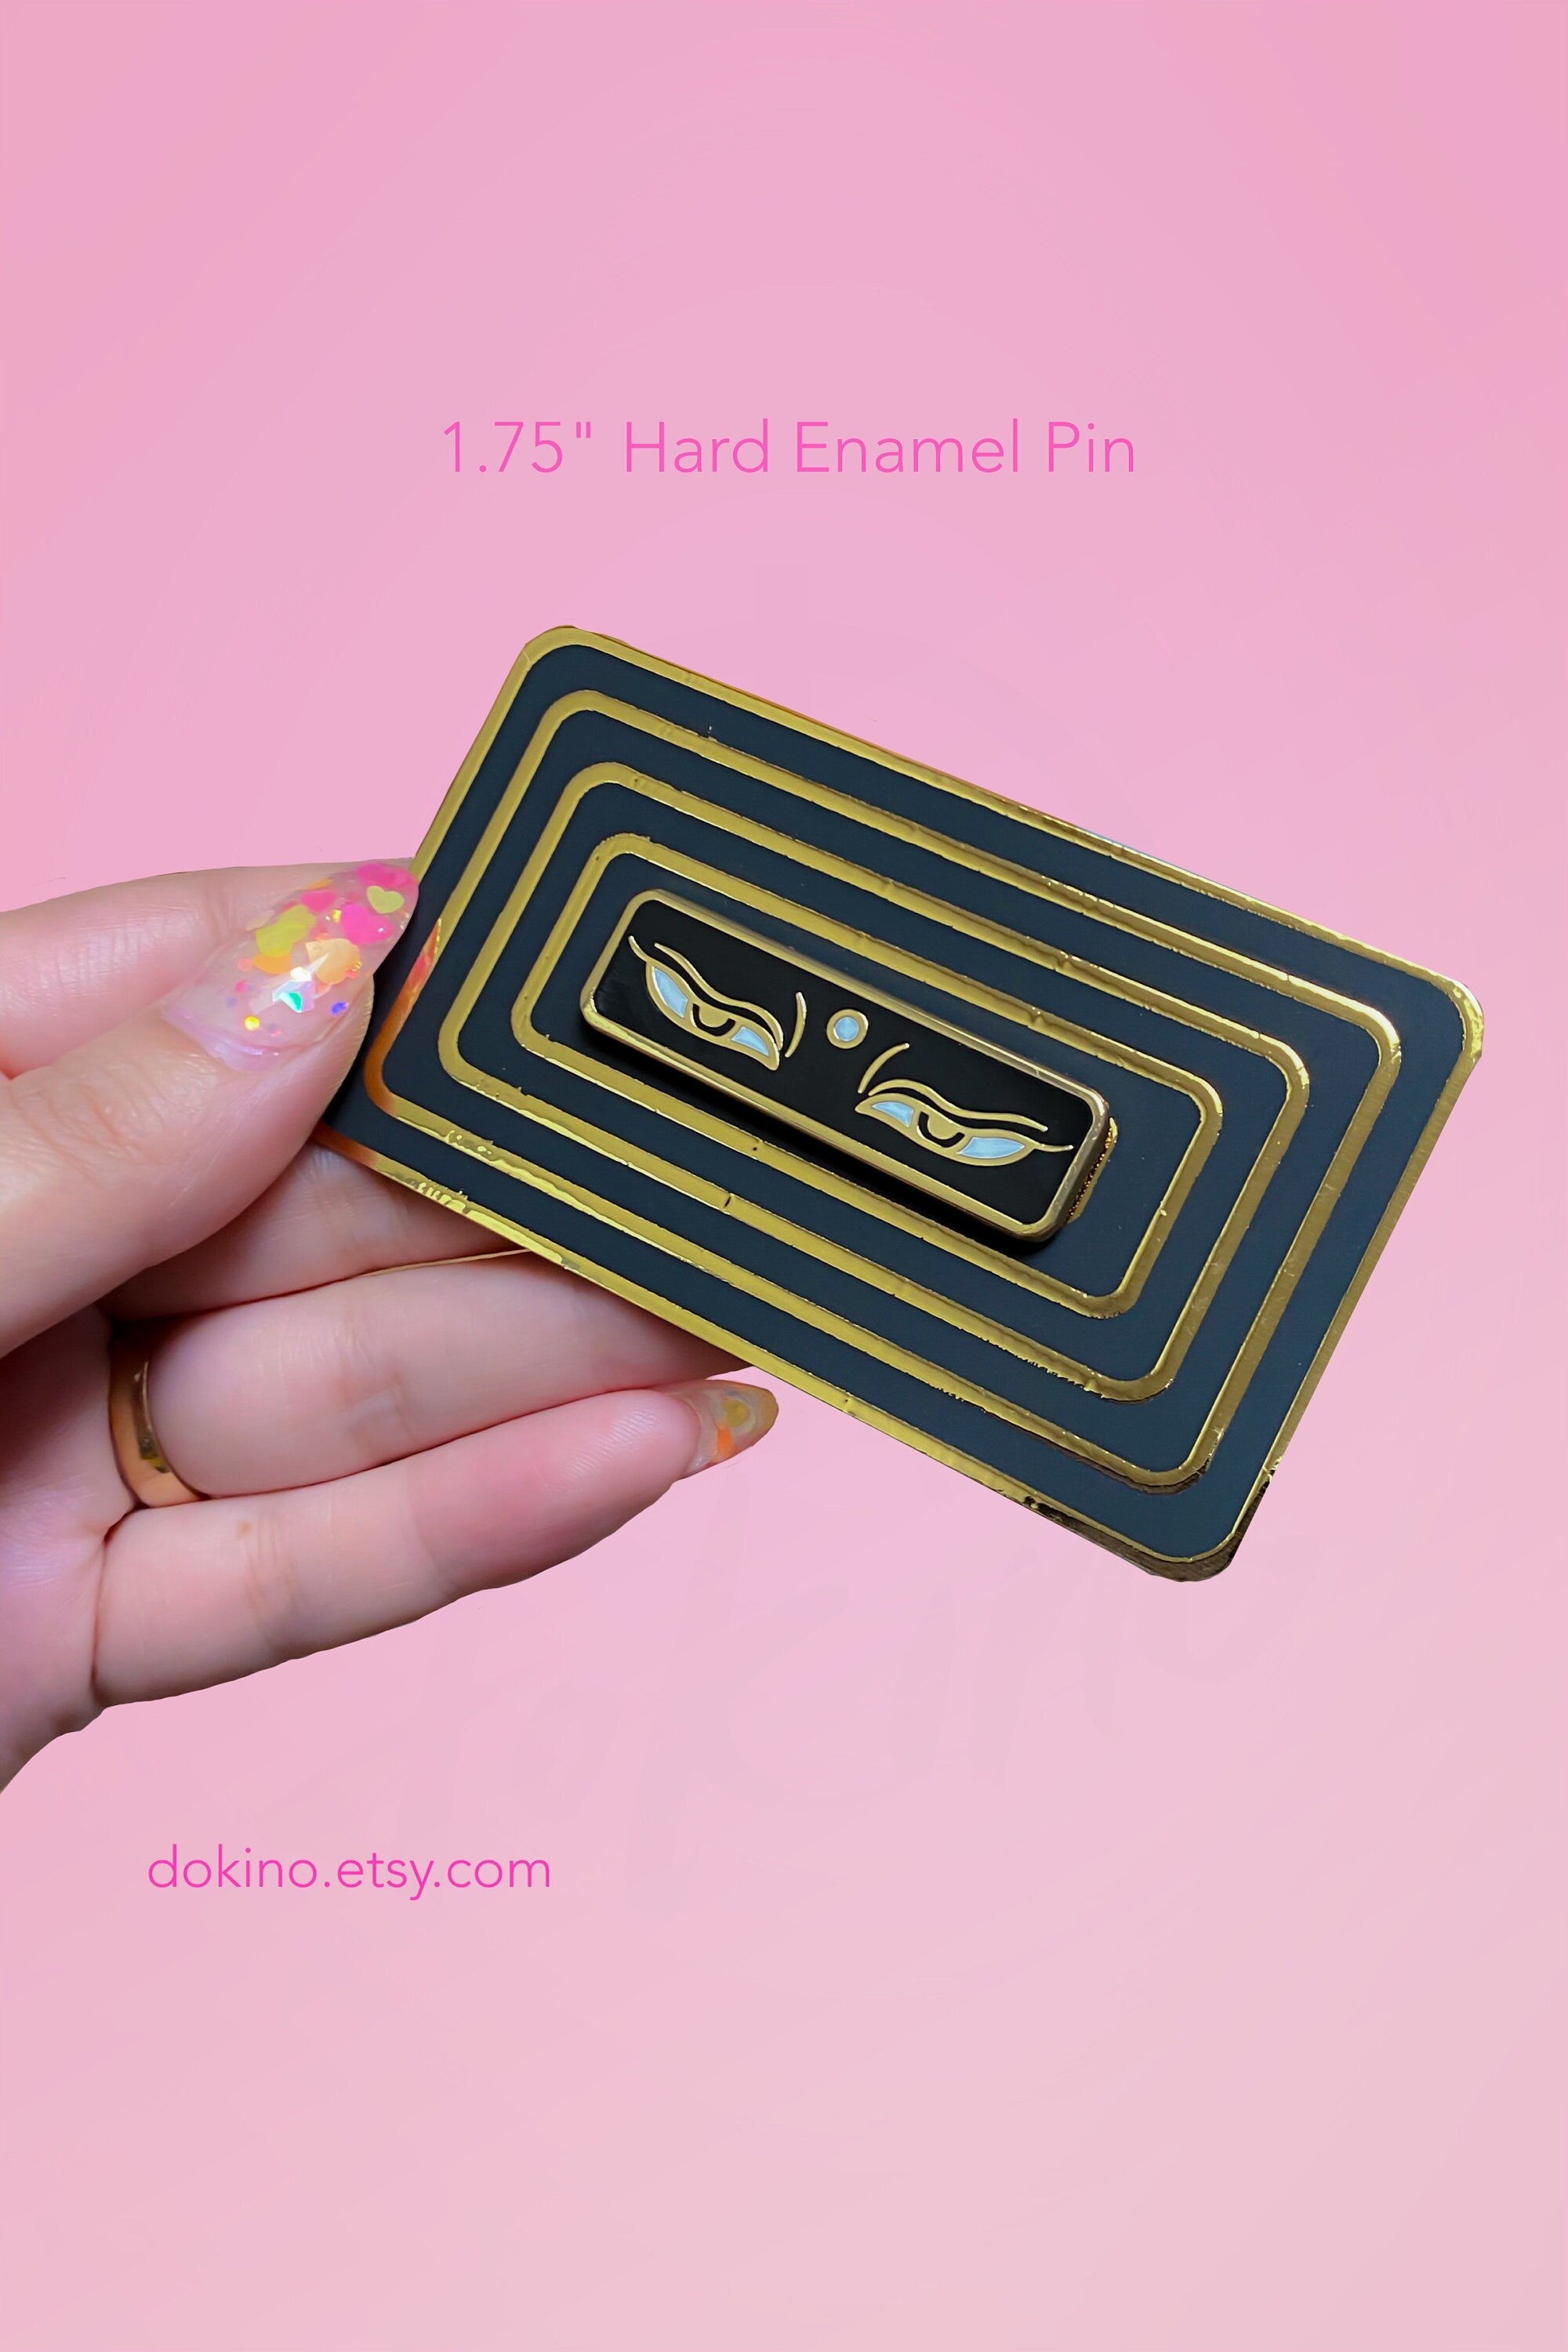 Pin on Modern nails